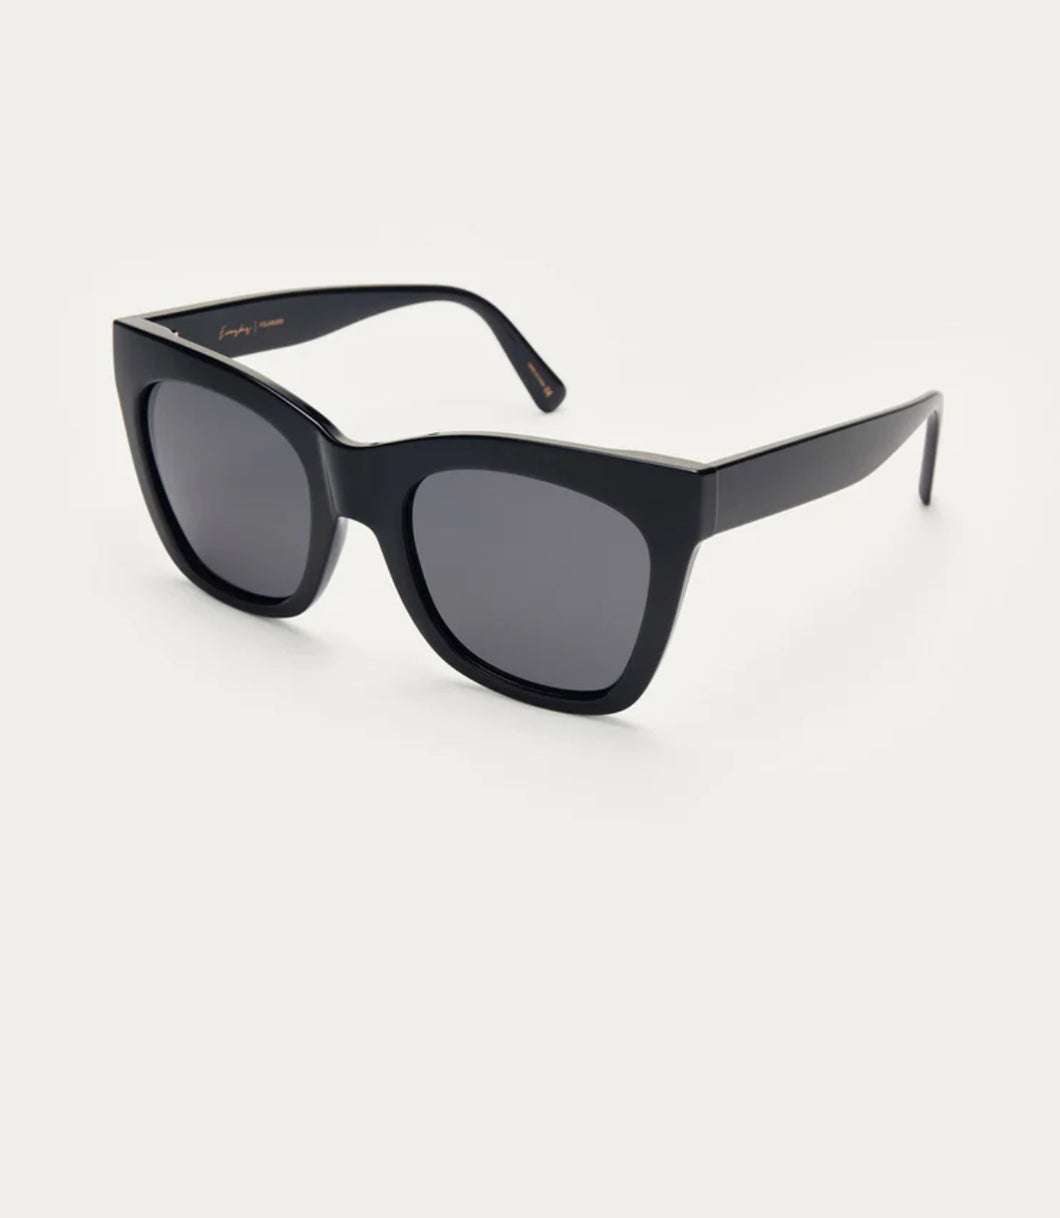 Z Supply: Everyday Polarized Sunglasses in Black Grey